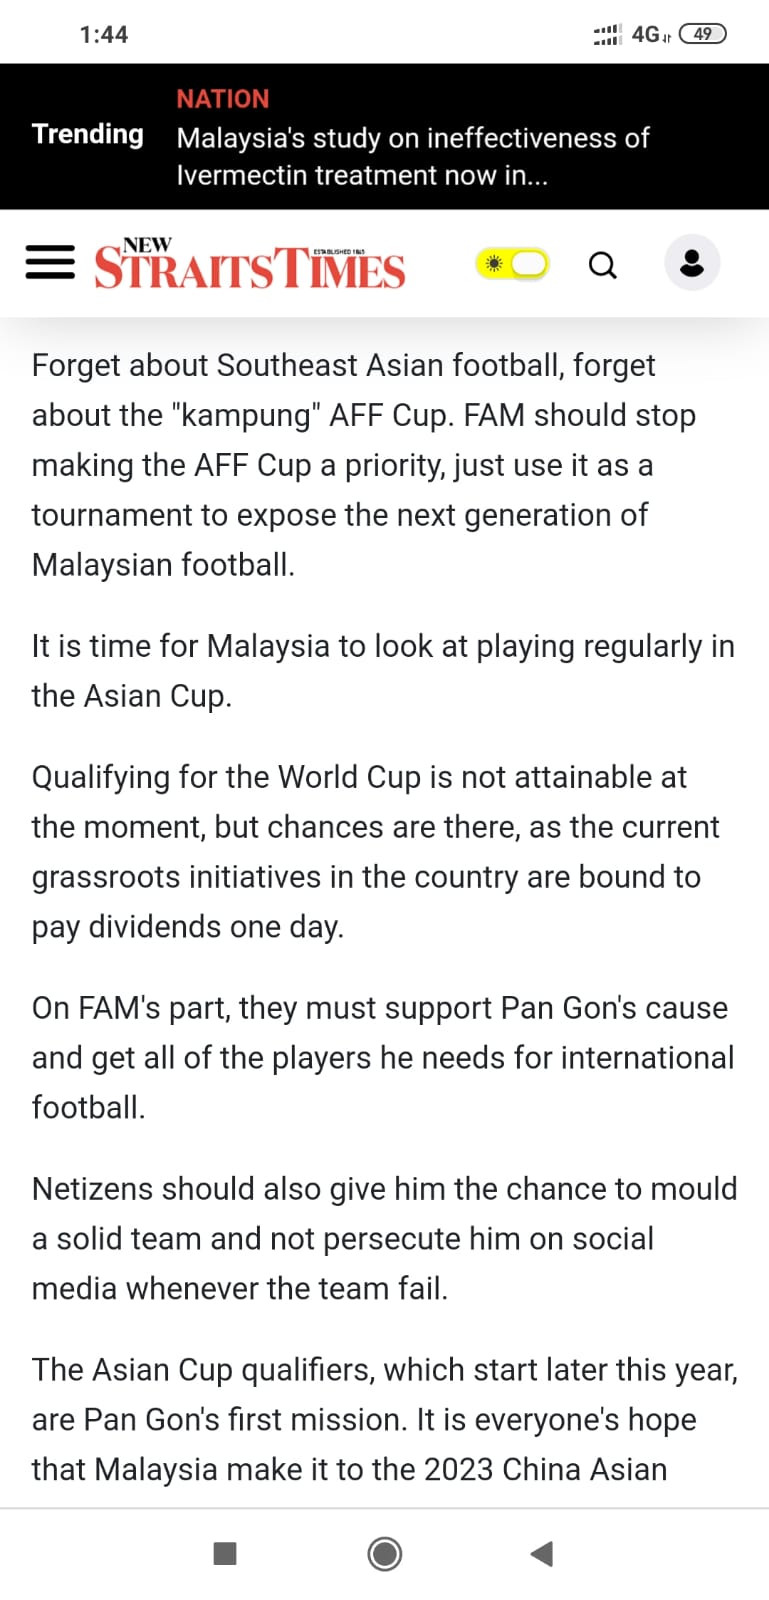 Dibantai Timnas Indonesia, Malaysia Sebut Piala AFF Kampungan